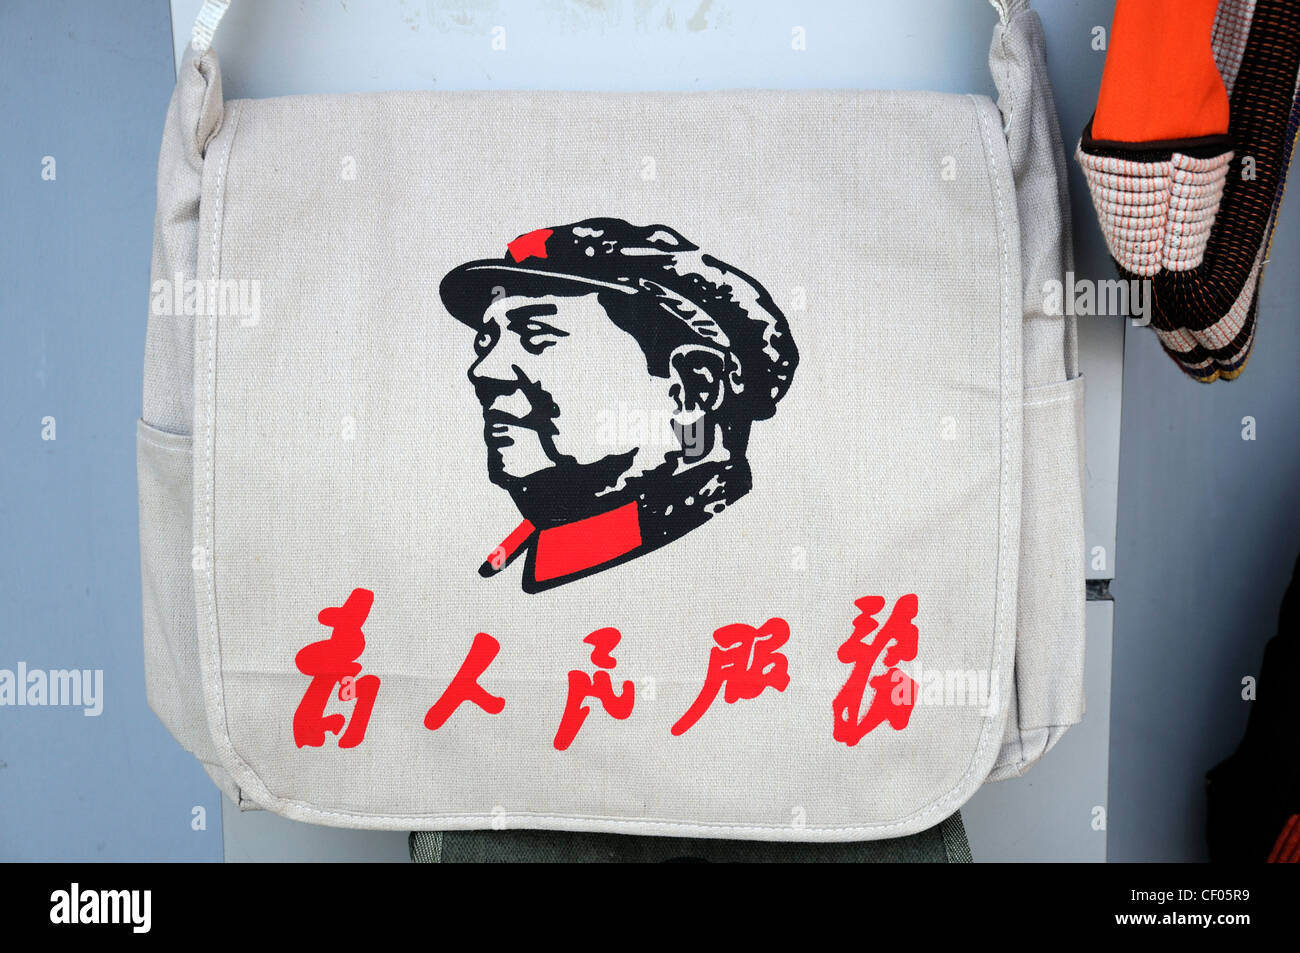 image likeness illustration caricature of chairman mao revolutionary figurehead leader on bags beijing china Stock Photo